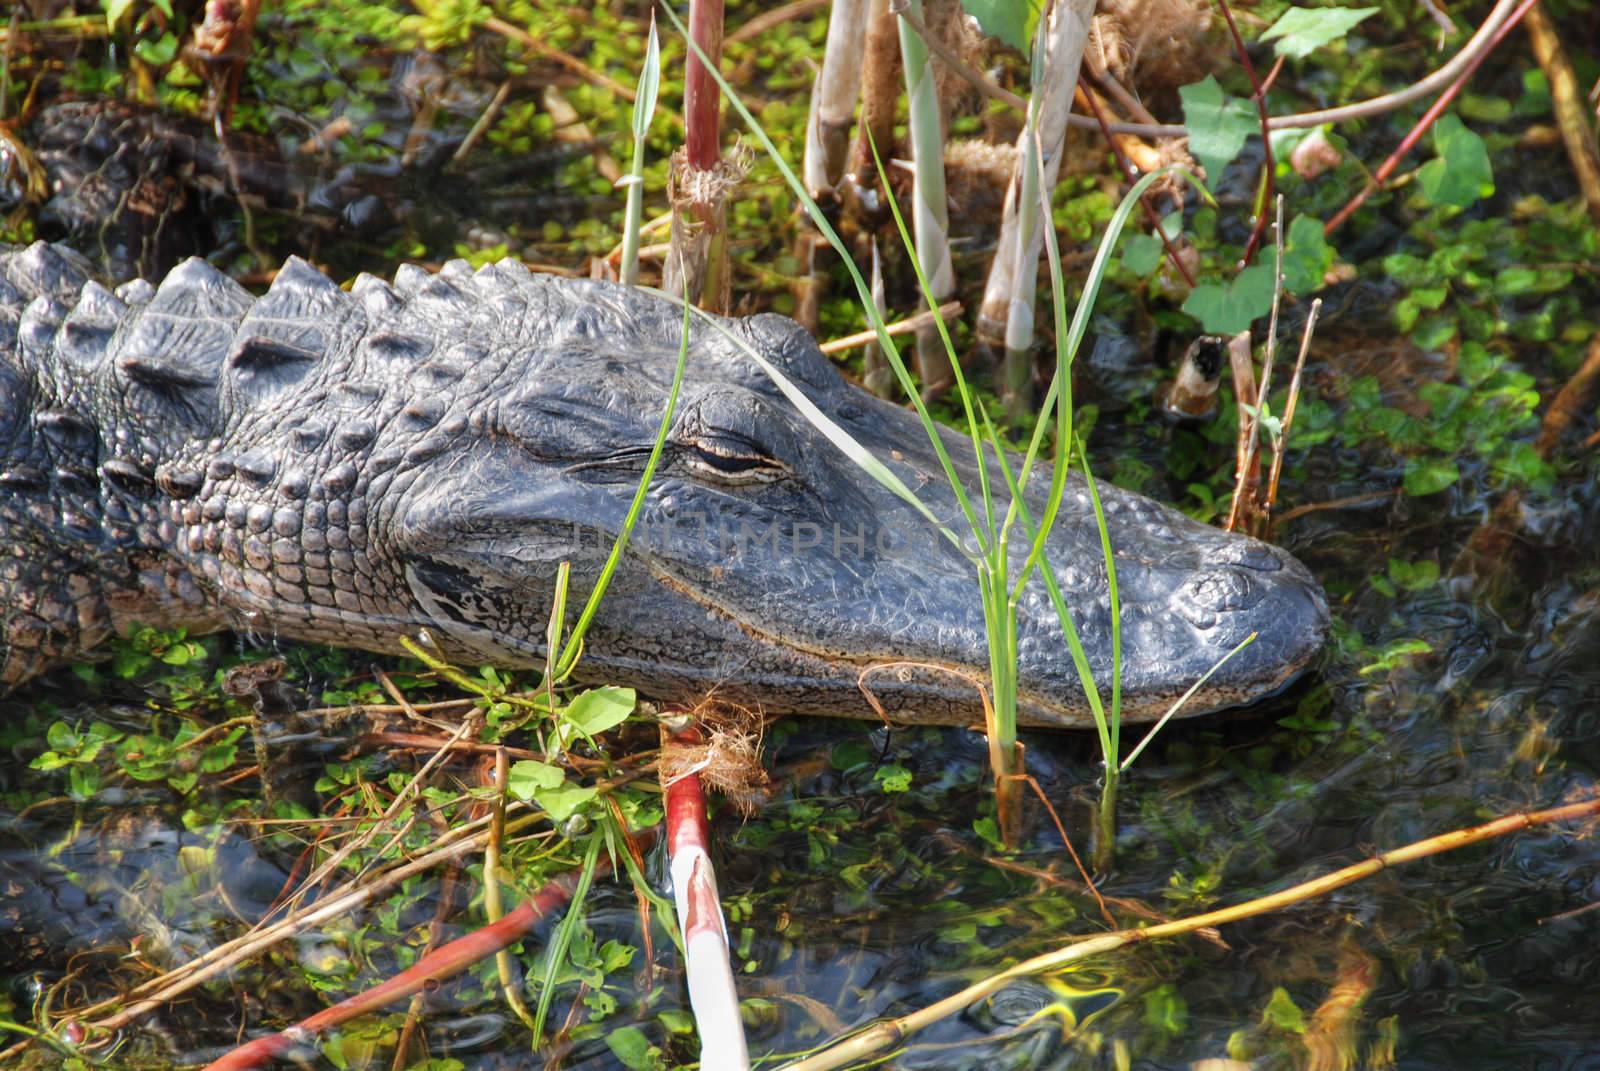 Sleeping Crocodile, Everglades, Florida by jovannig